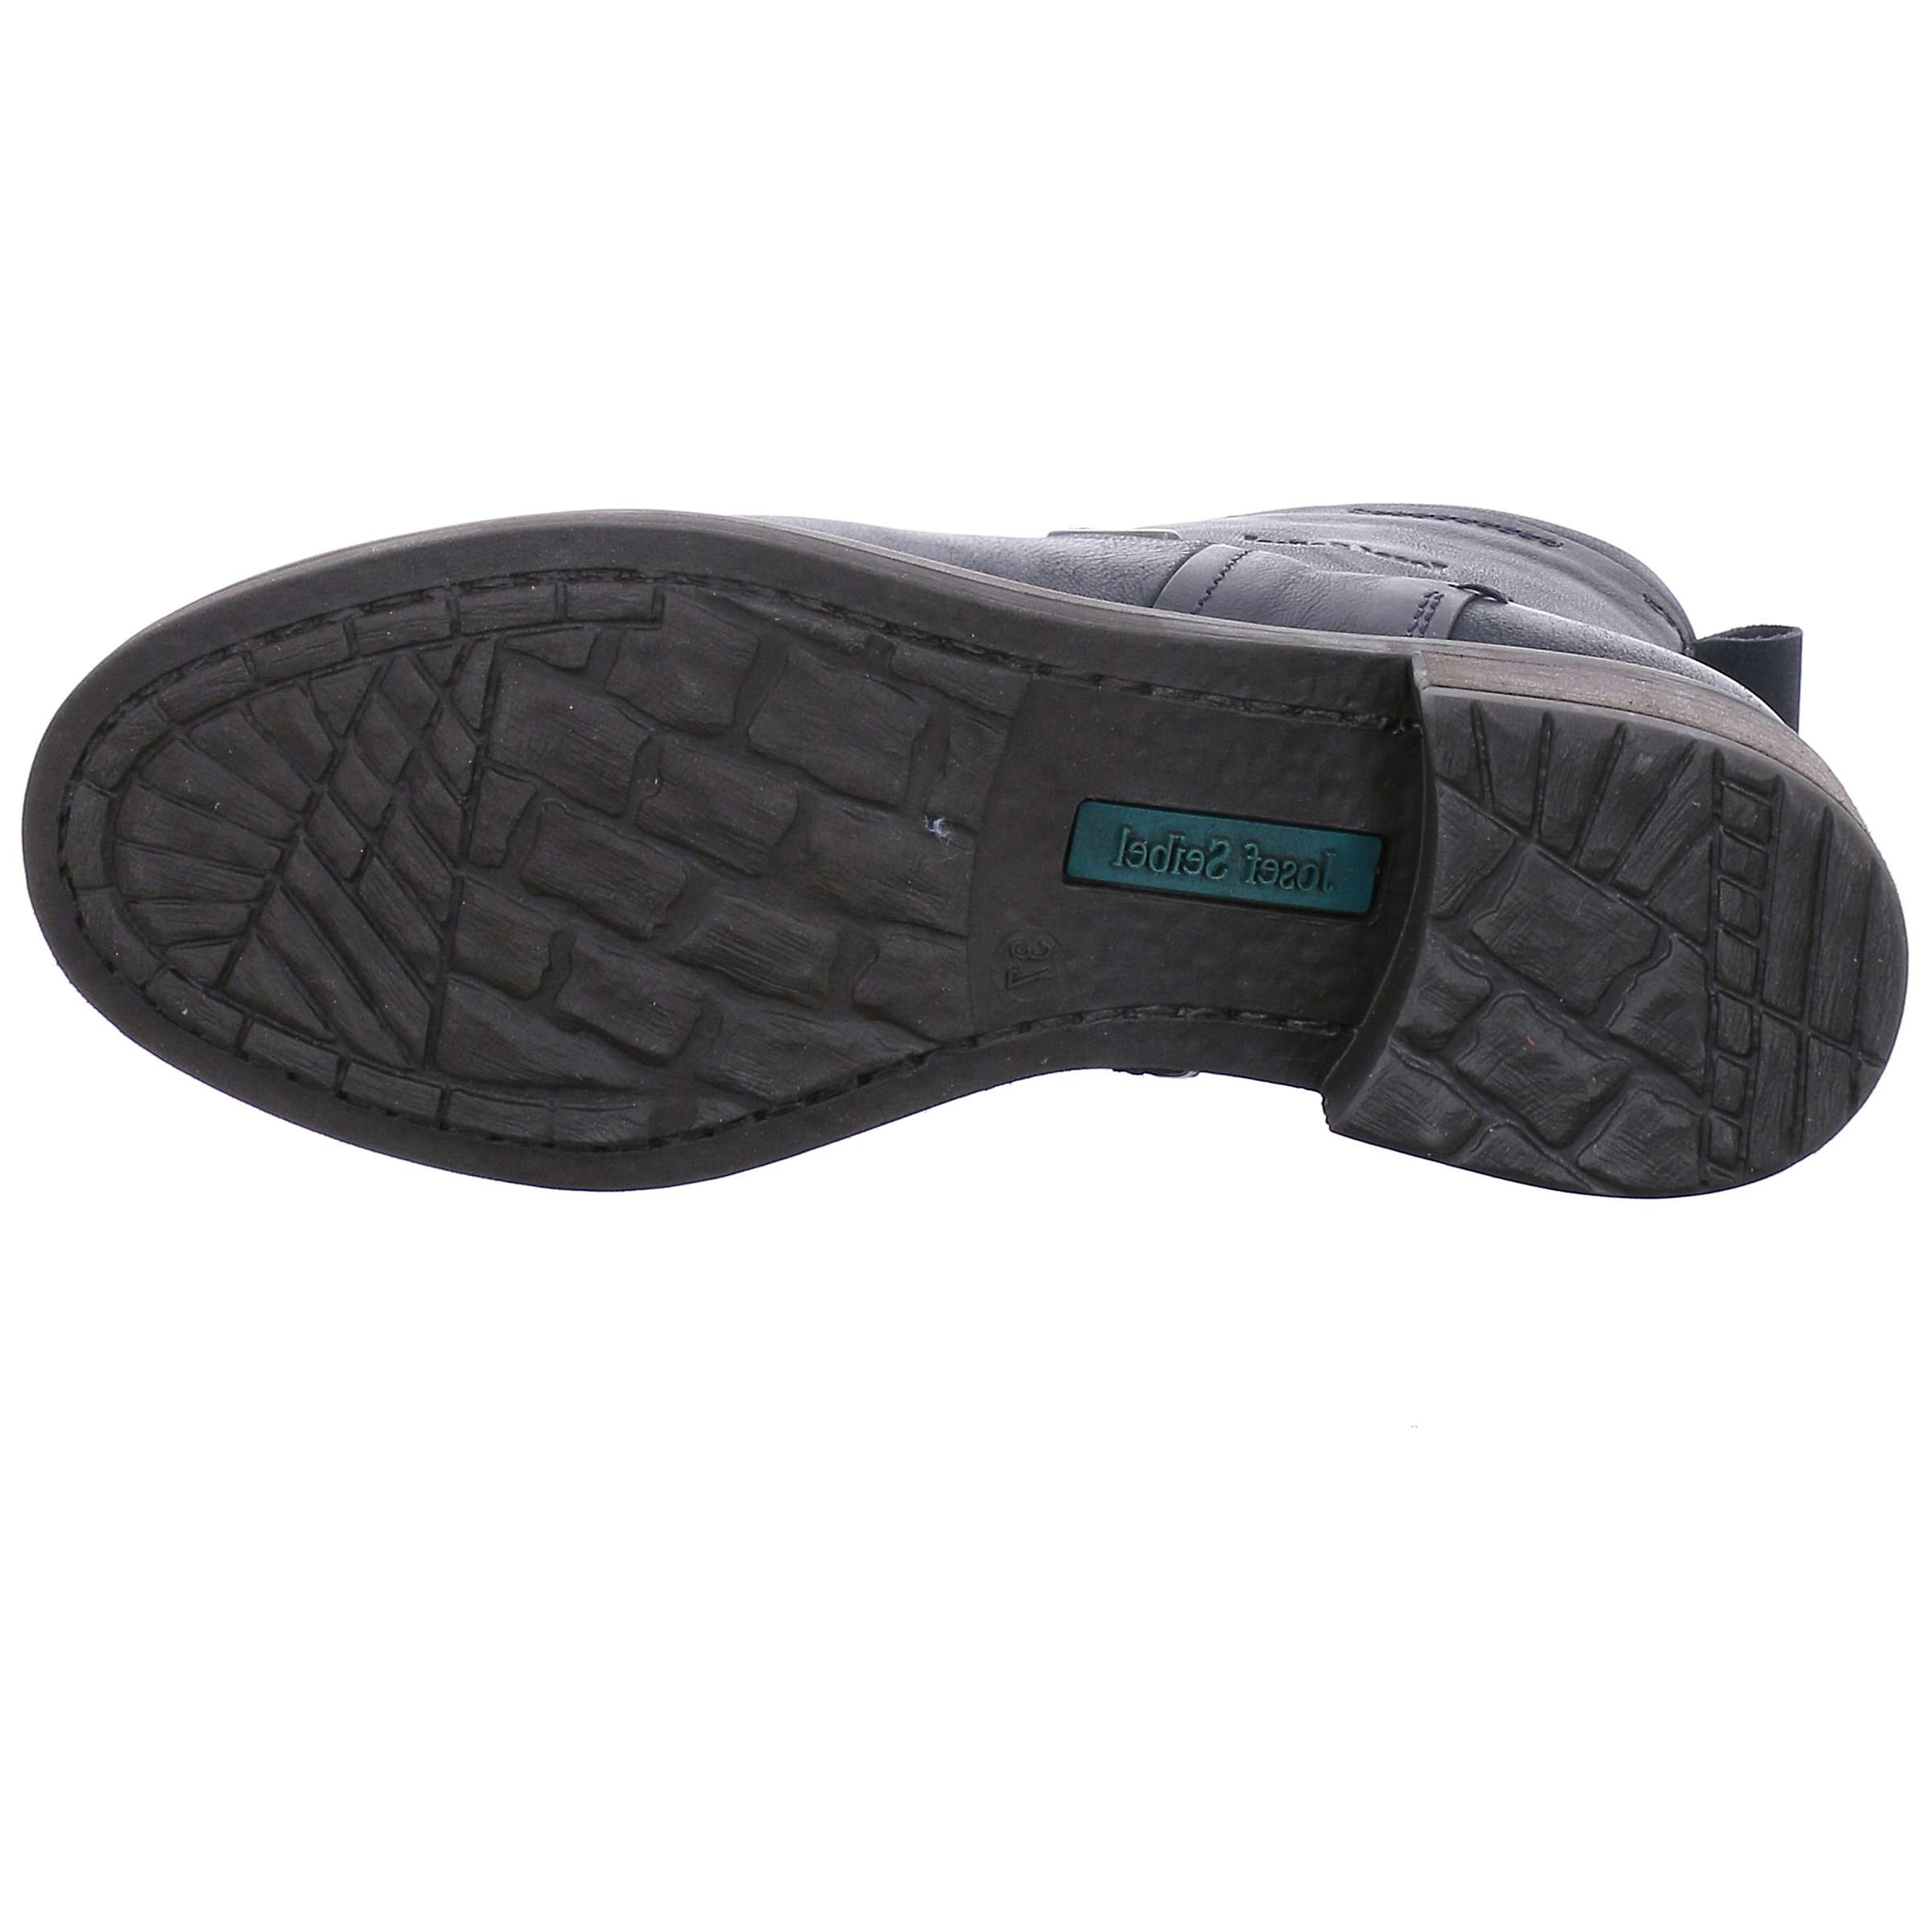 Buy Josef Seibel Selena 50 Waterproof Ankle Boots Online at johnlewis.com